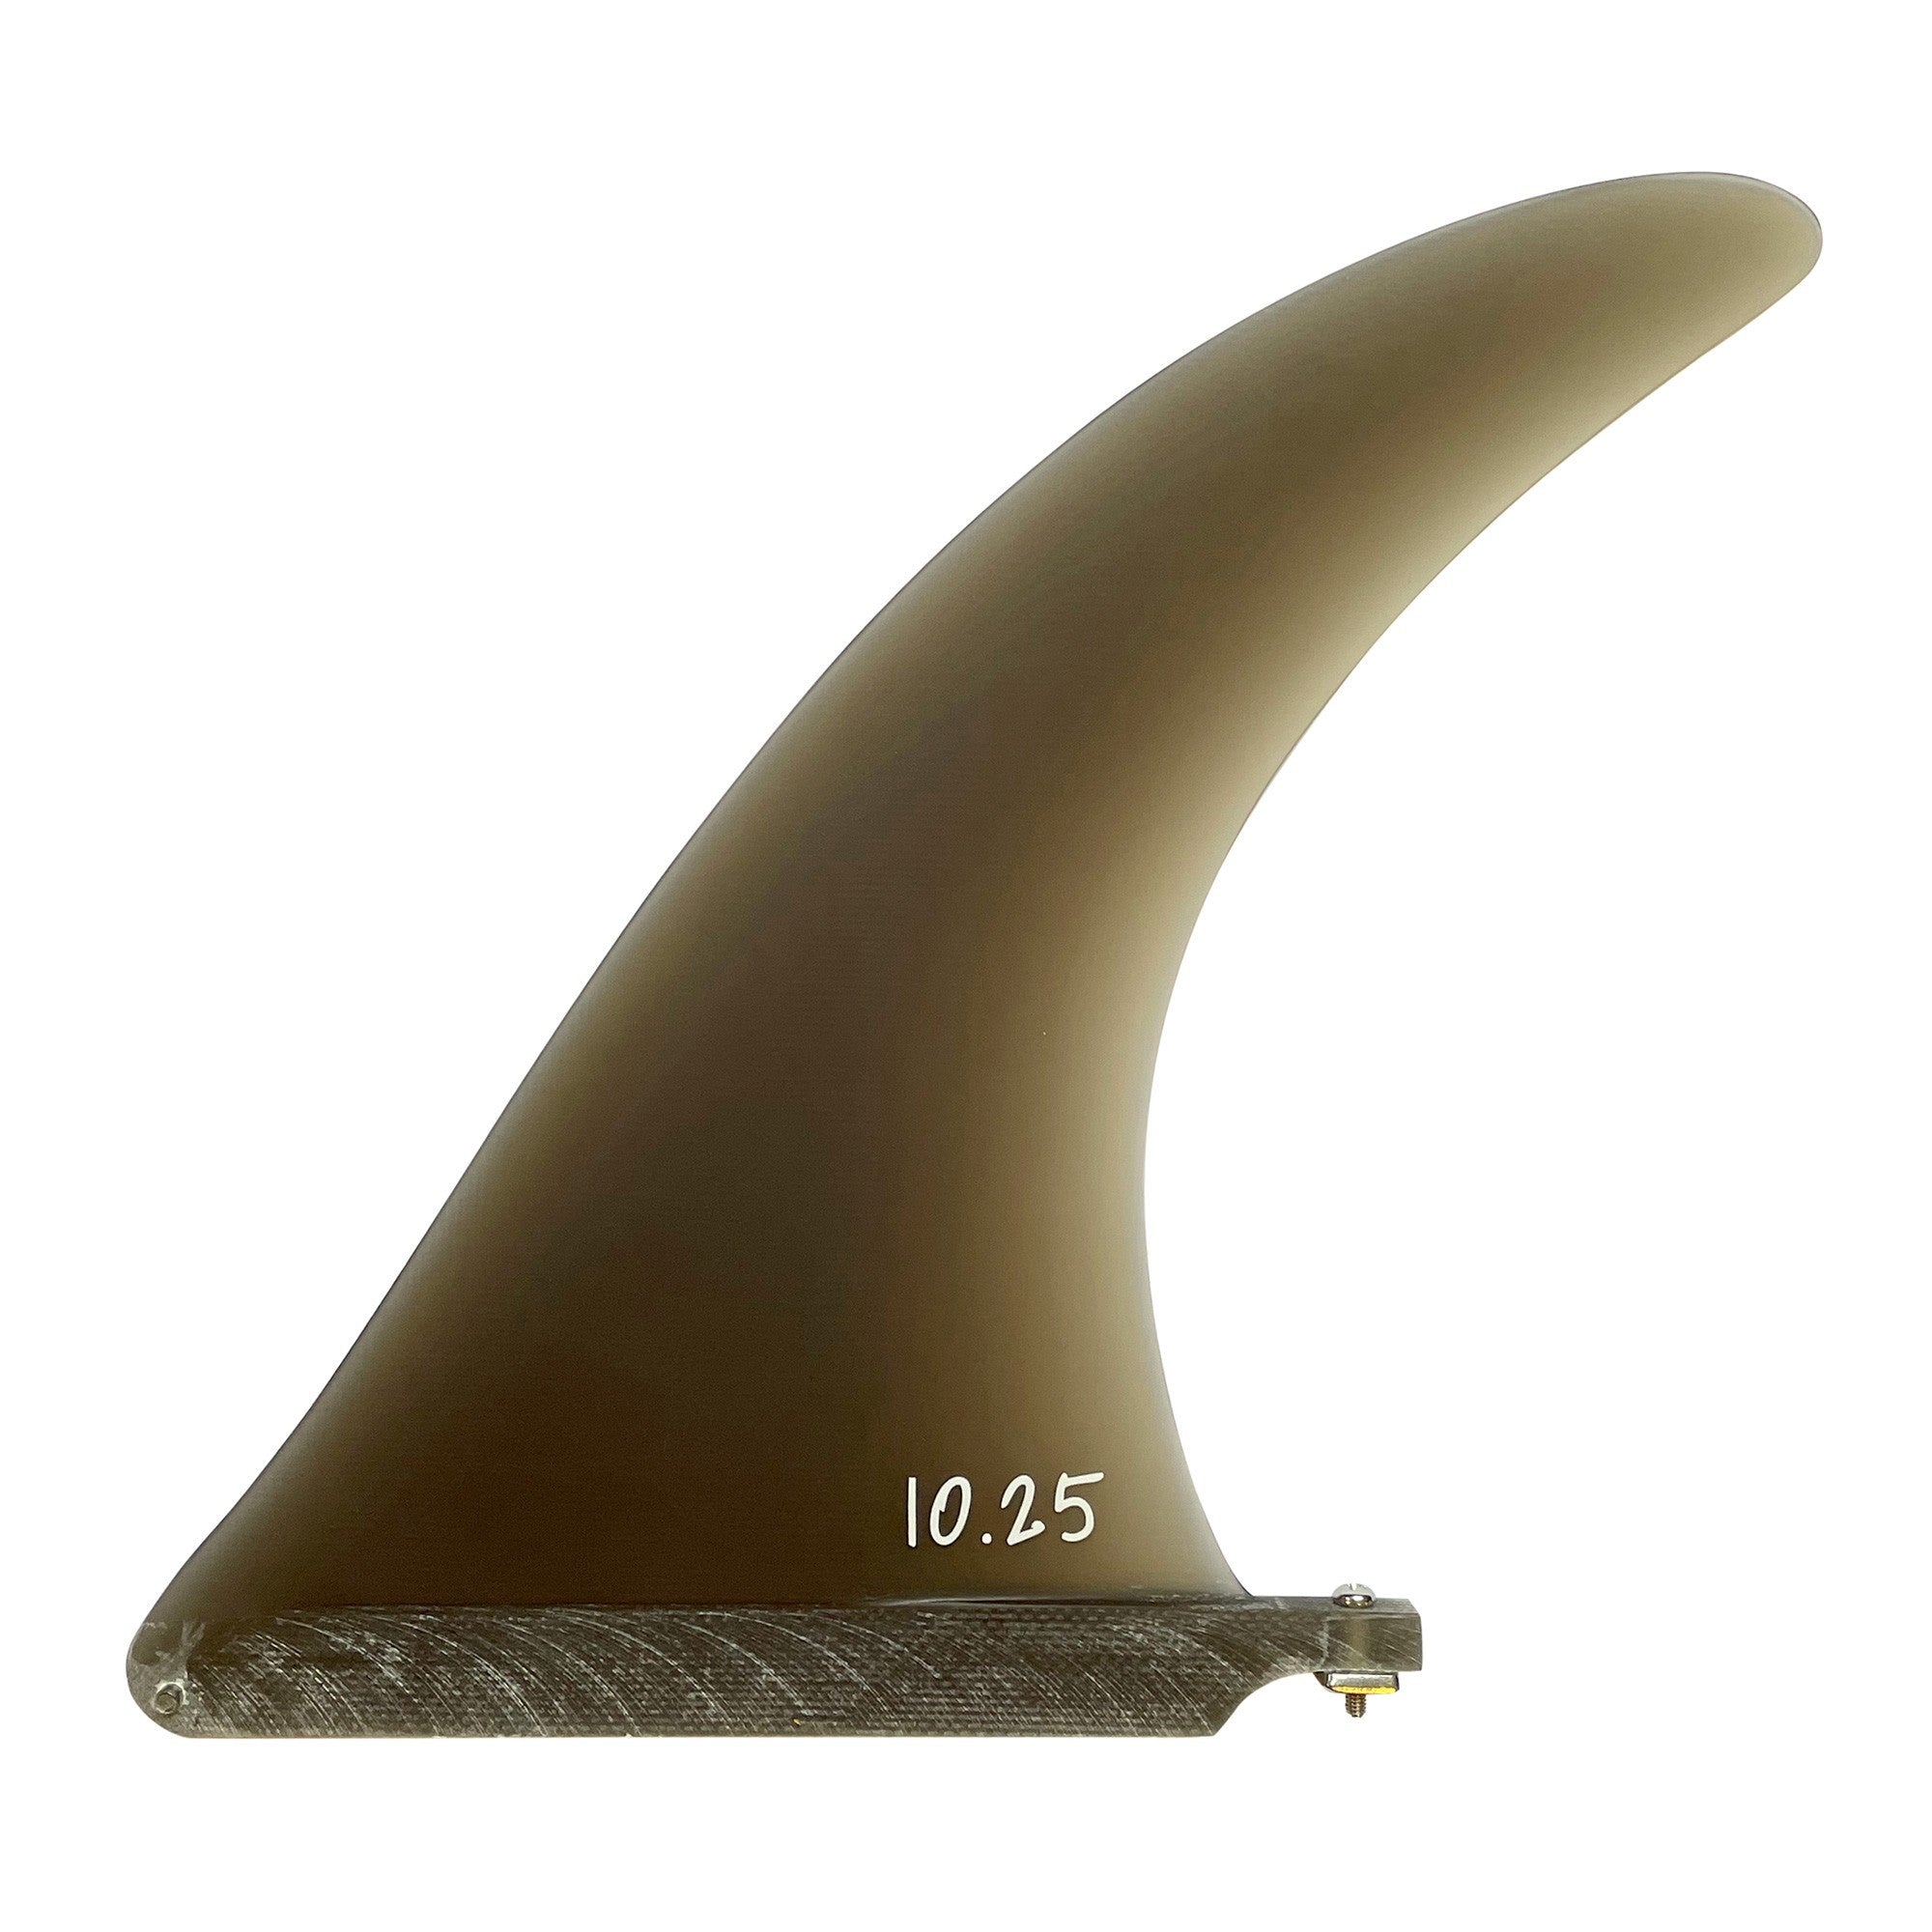 SURF SYSTEM - Dolphin Fiberglass Single Fin (Us Box) - 6.5" - Smoke